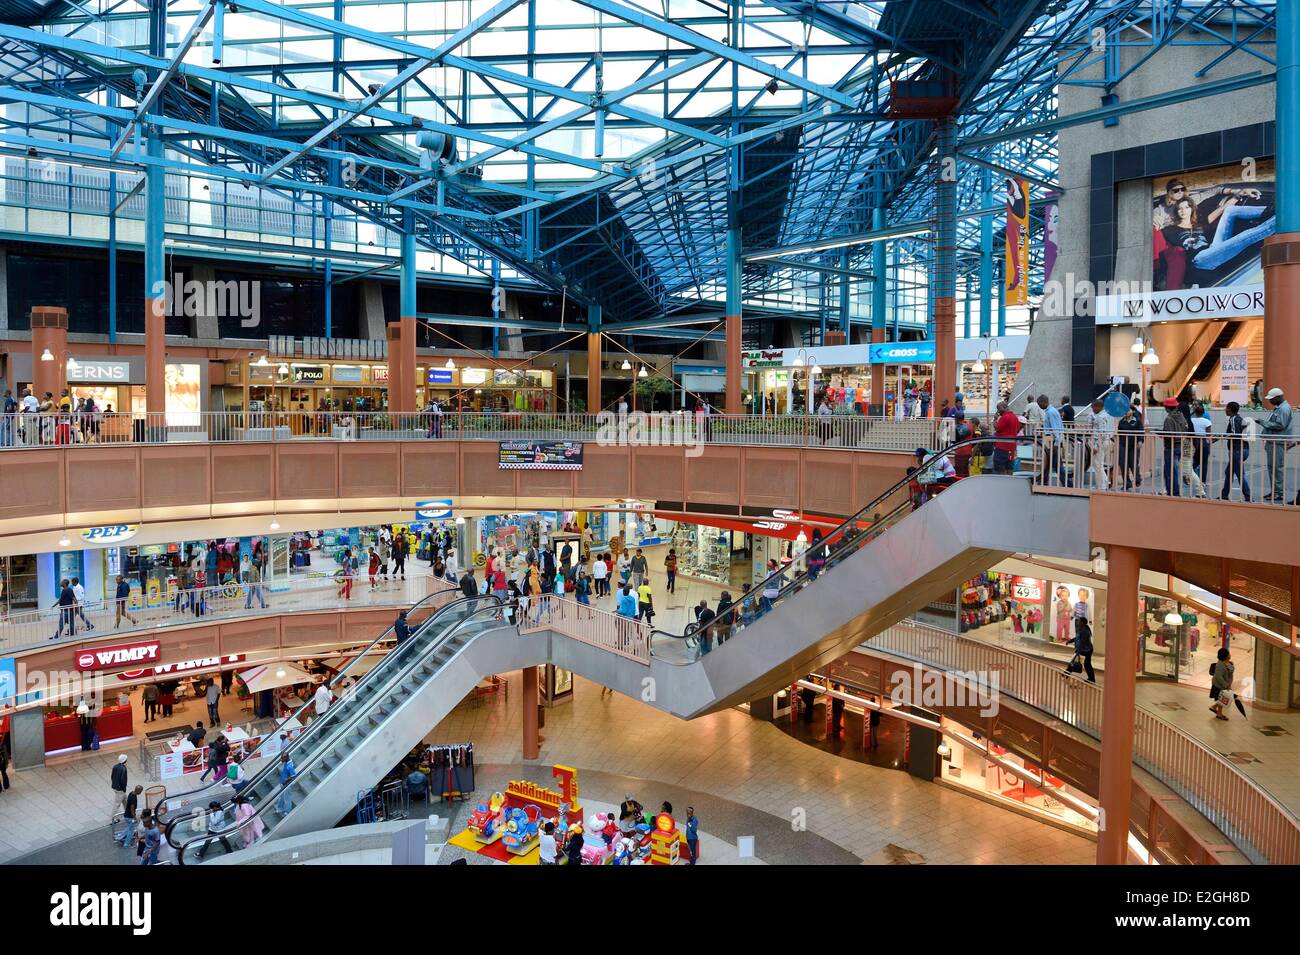 South Africa Gauteng province Johannesburg CBD (Central Business District) Carlton center downtown Mall Stock Photo